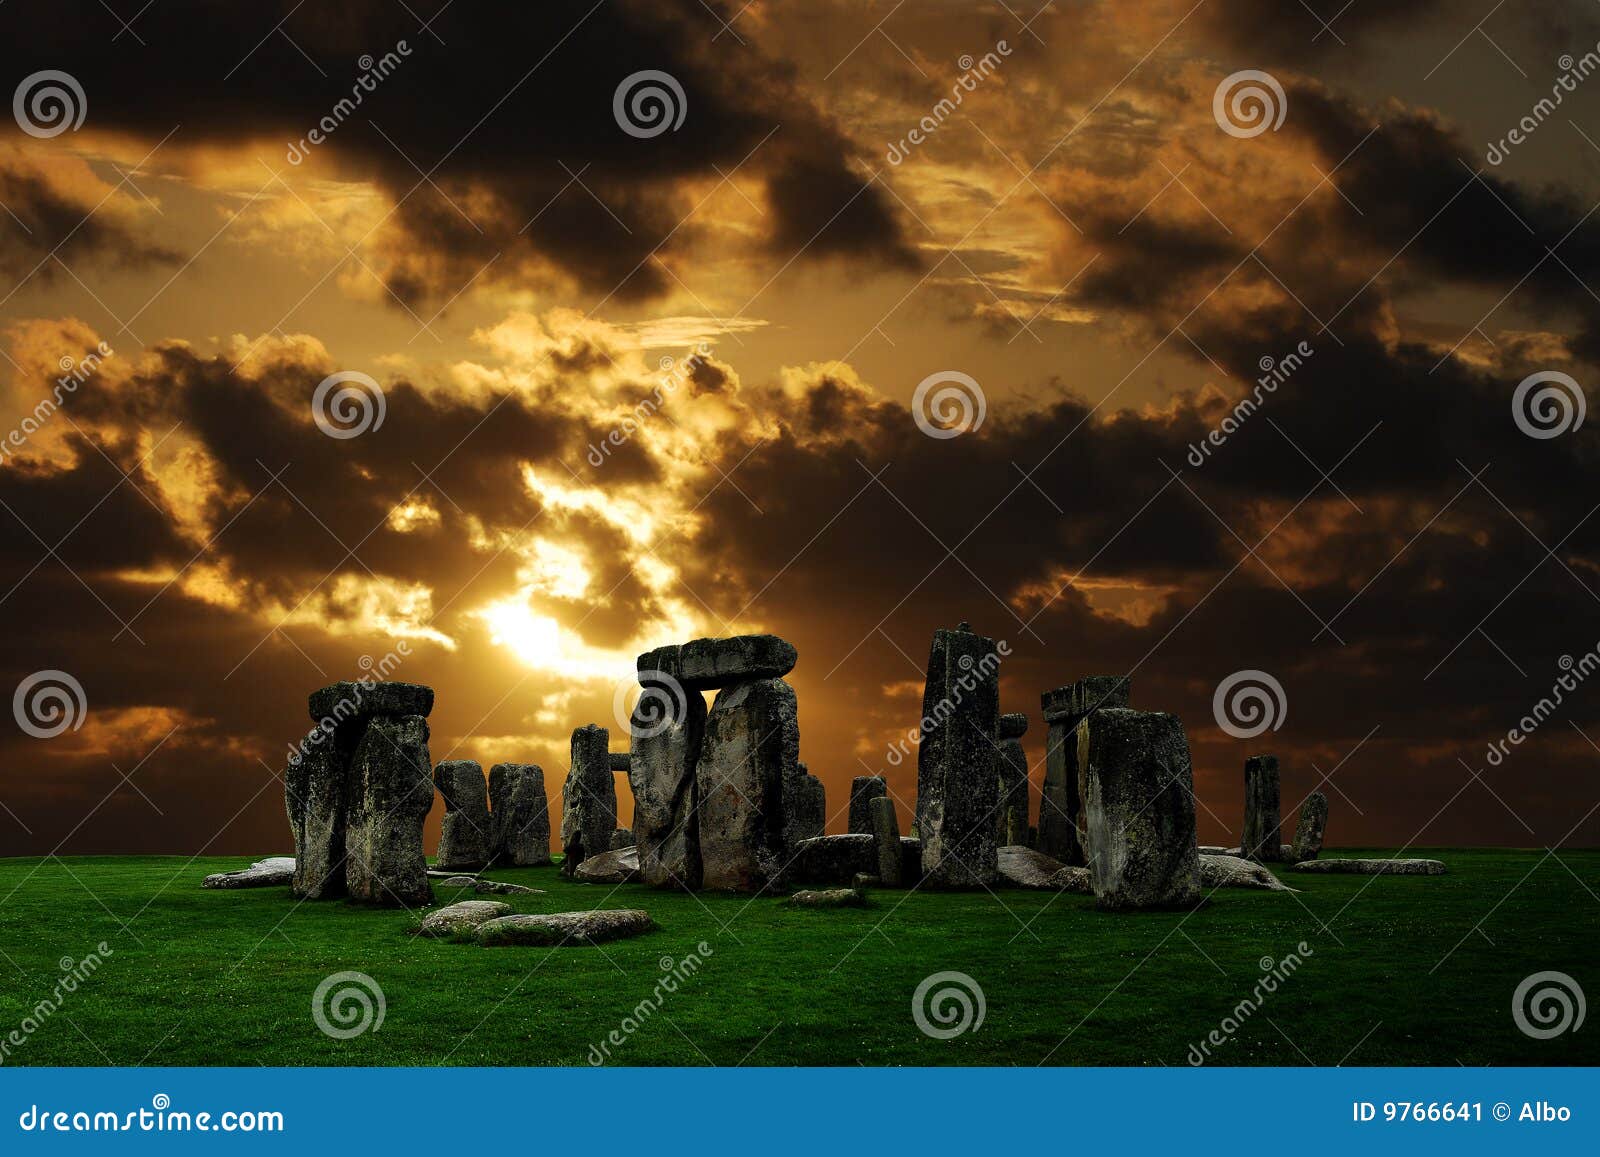 stonehenge ruins